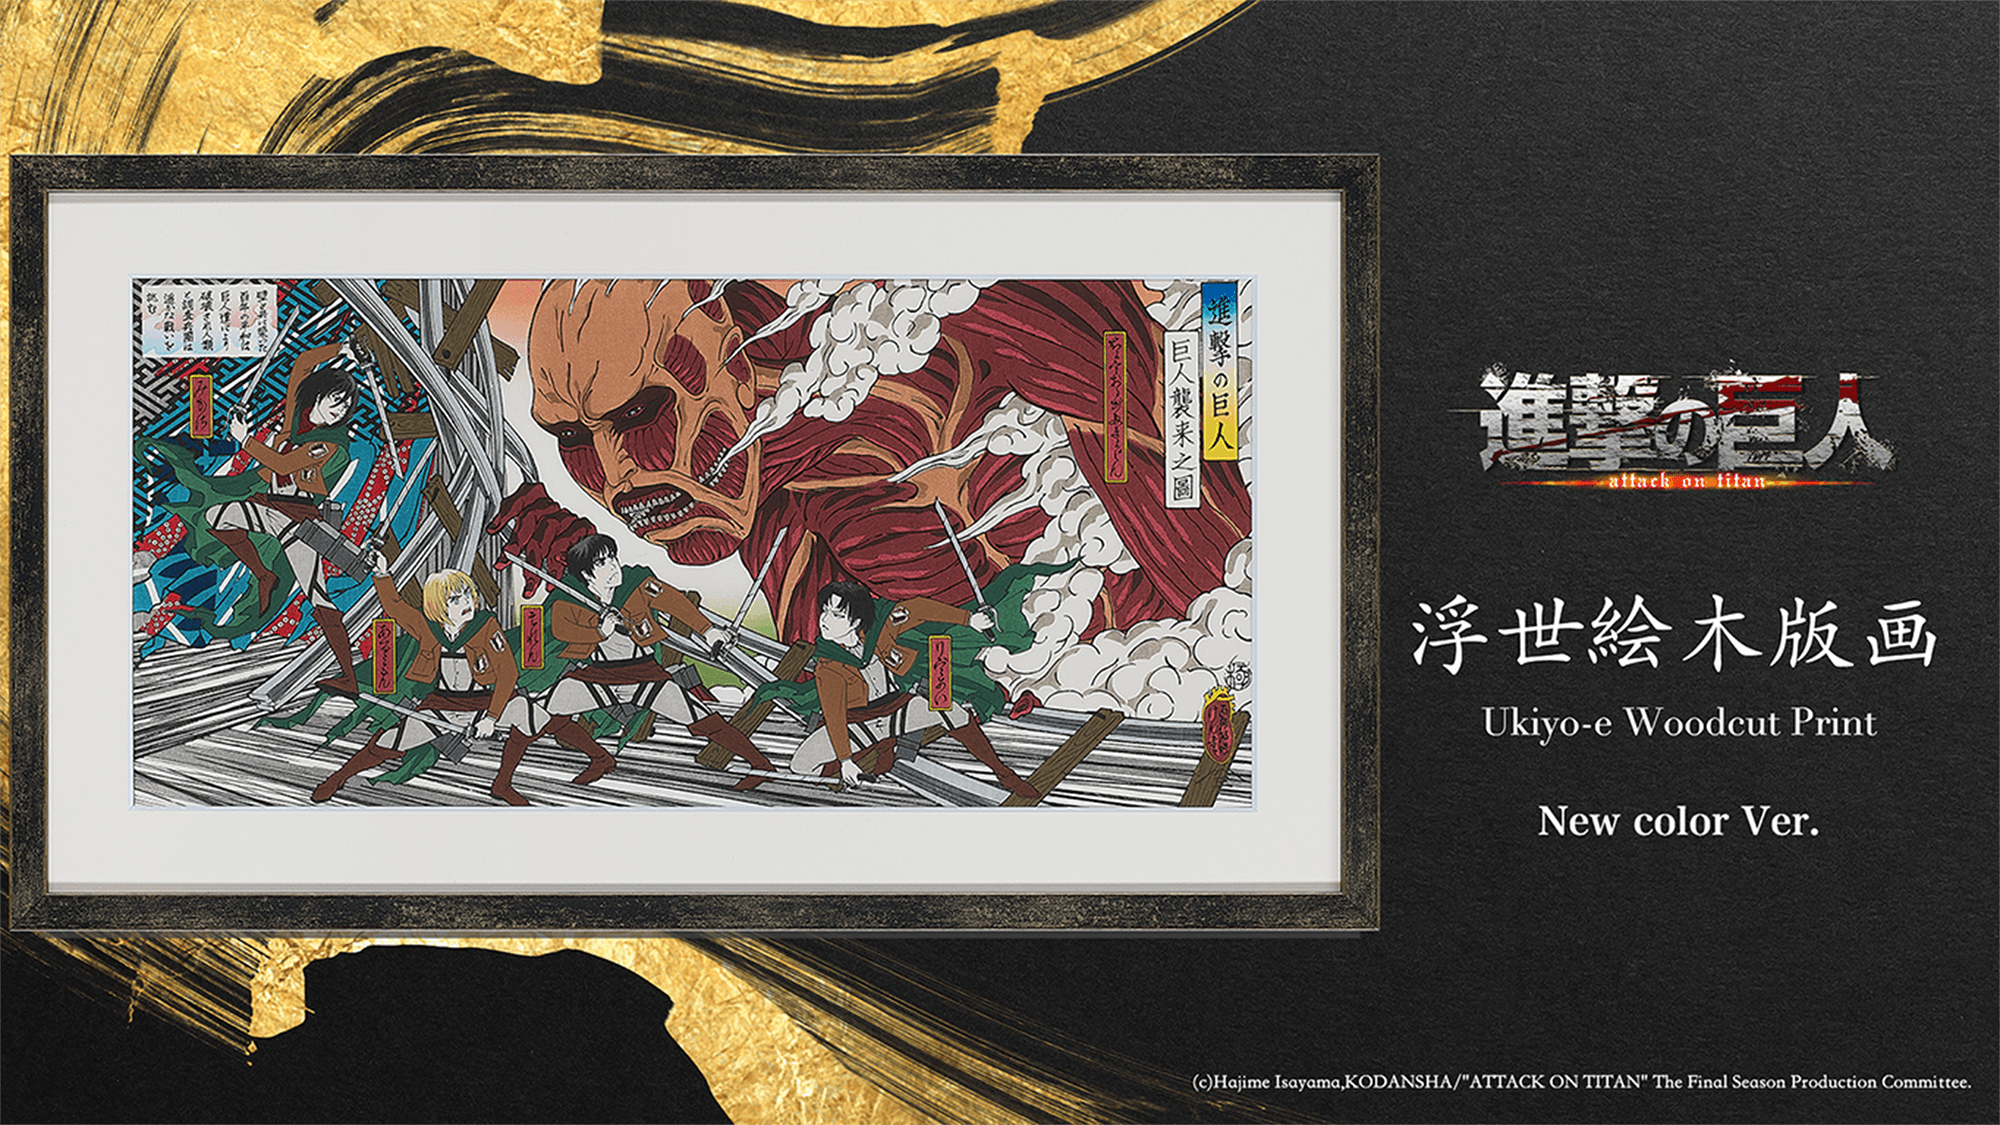 Attack on Titan Ukiyo-e Woodcut Print